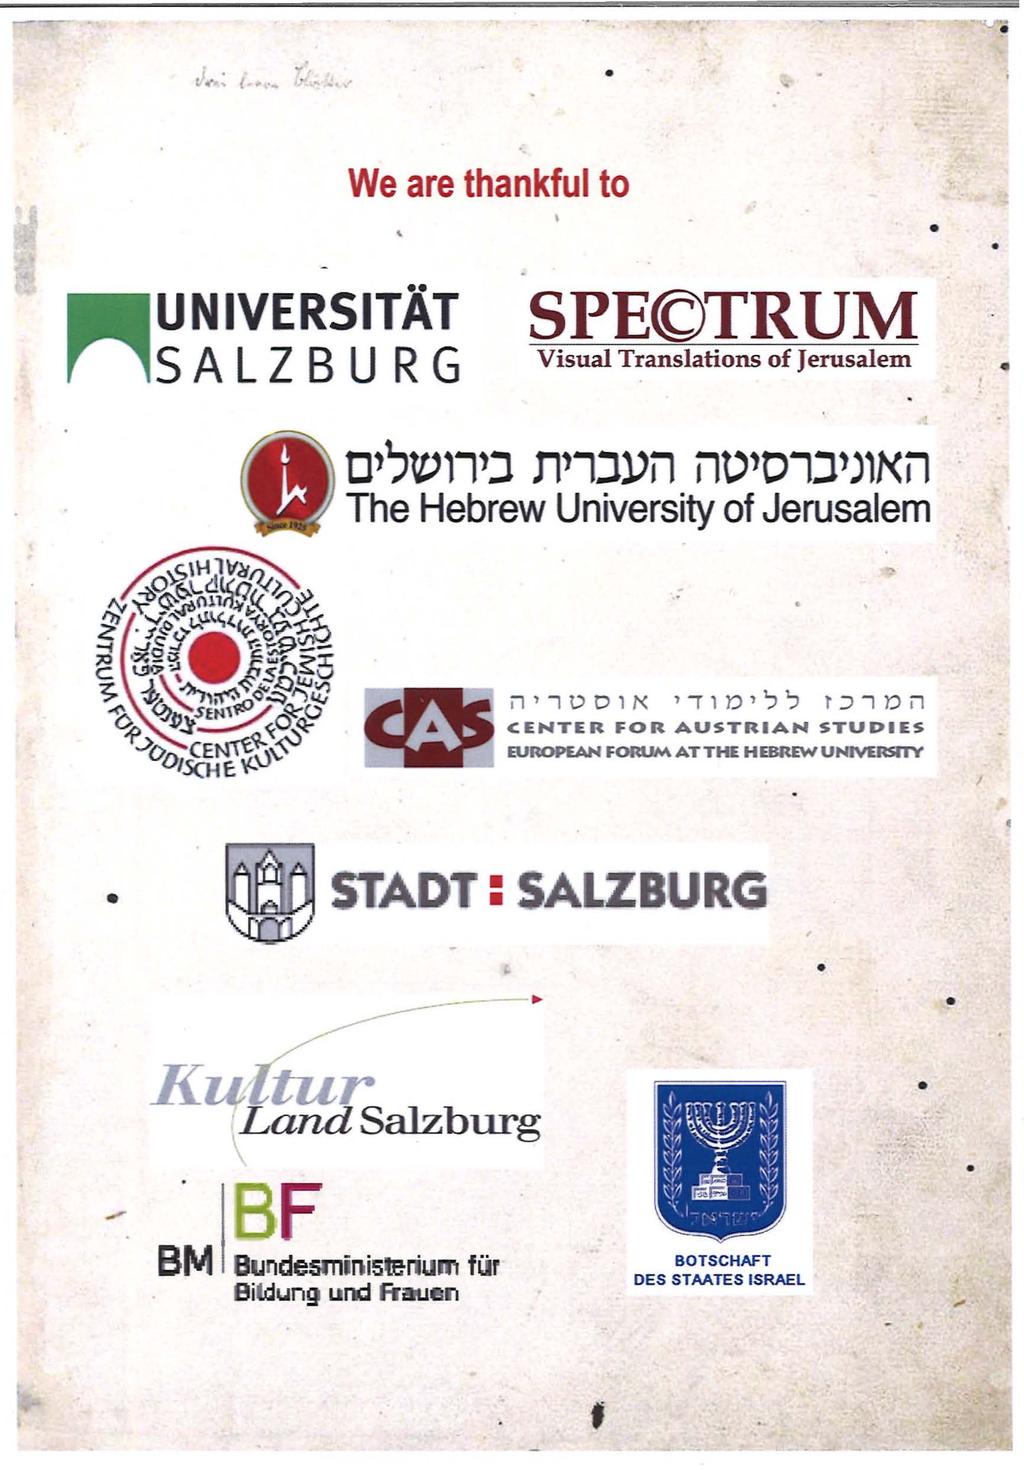 -.).': I... ".,' _ UNIVERSITAT r--"sa LZ B U RG We are thankful to SPE(gTRUM Visual Translations of Jerusalem O"~11'J n'1jl'n nv'd1j')1xn The Hebrew University of Jerusalem L..--. _ i1 'ivd 1K ' "'T1 l:j'?